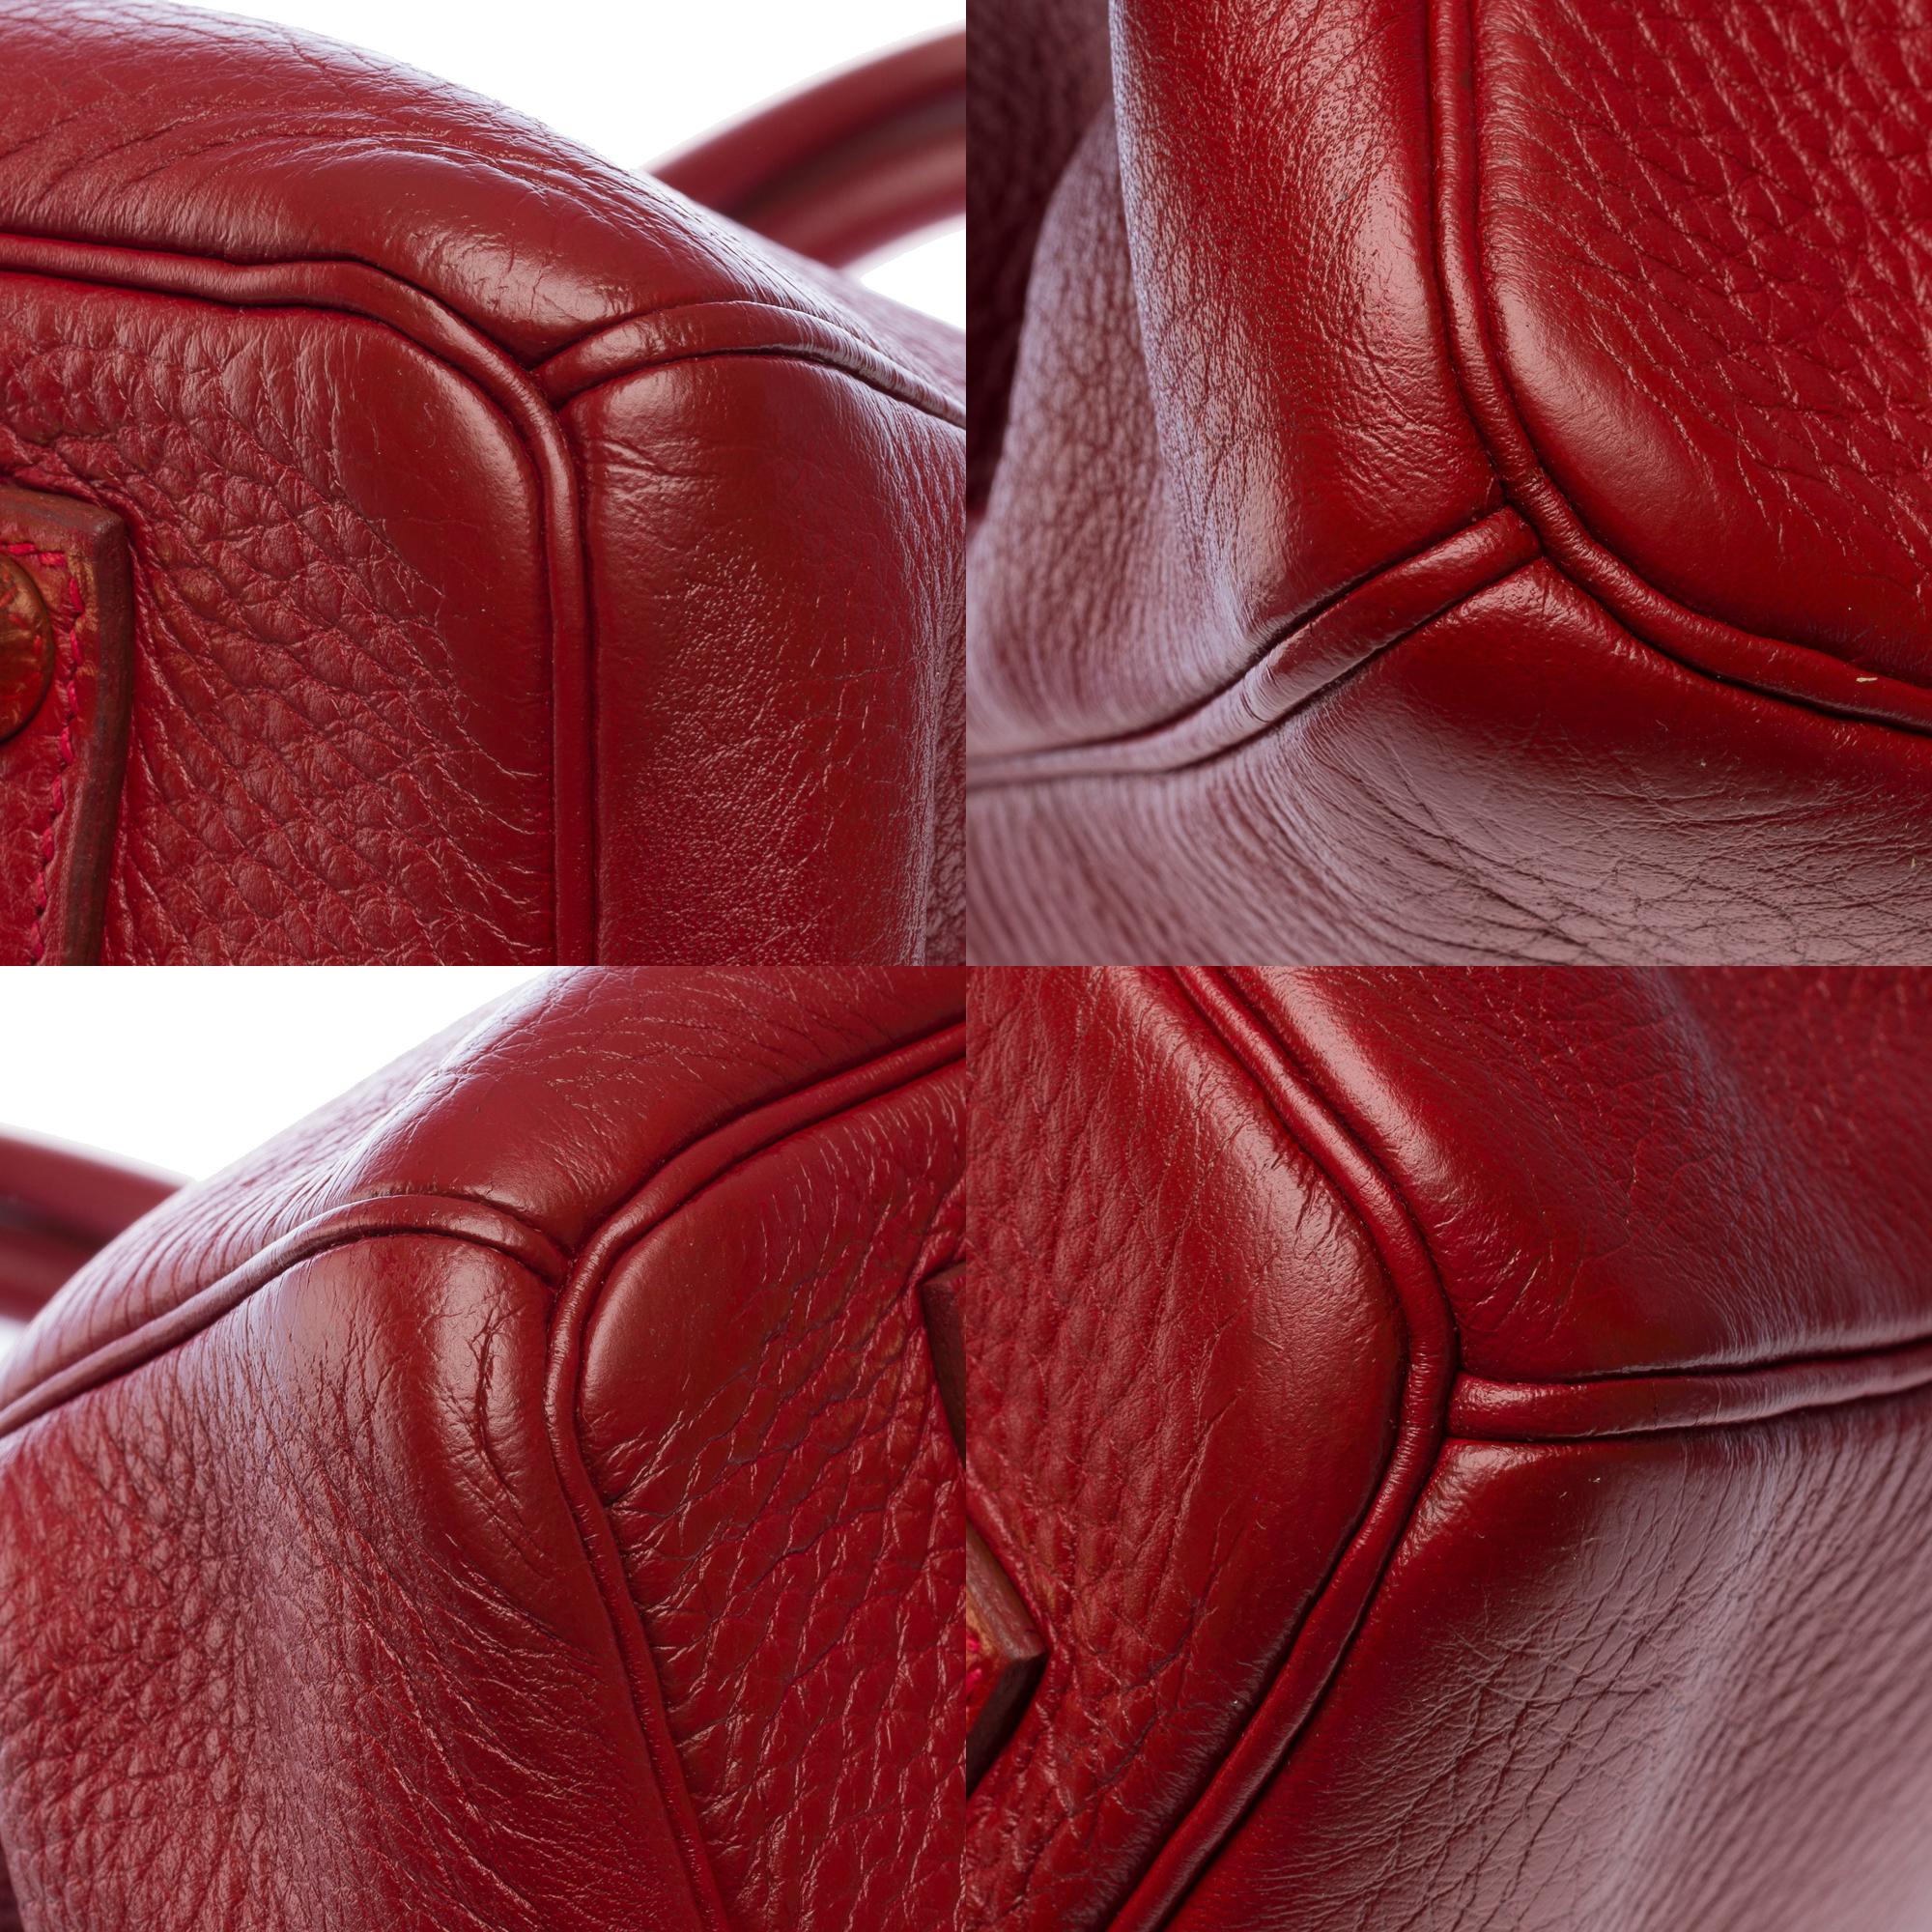 Stunning Hermès Birkin 35 handbag in Rouge Garance Togo leather, GHW For Sale 6